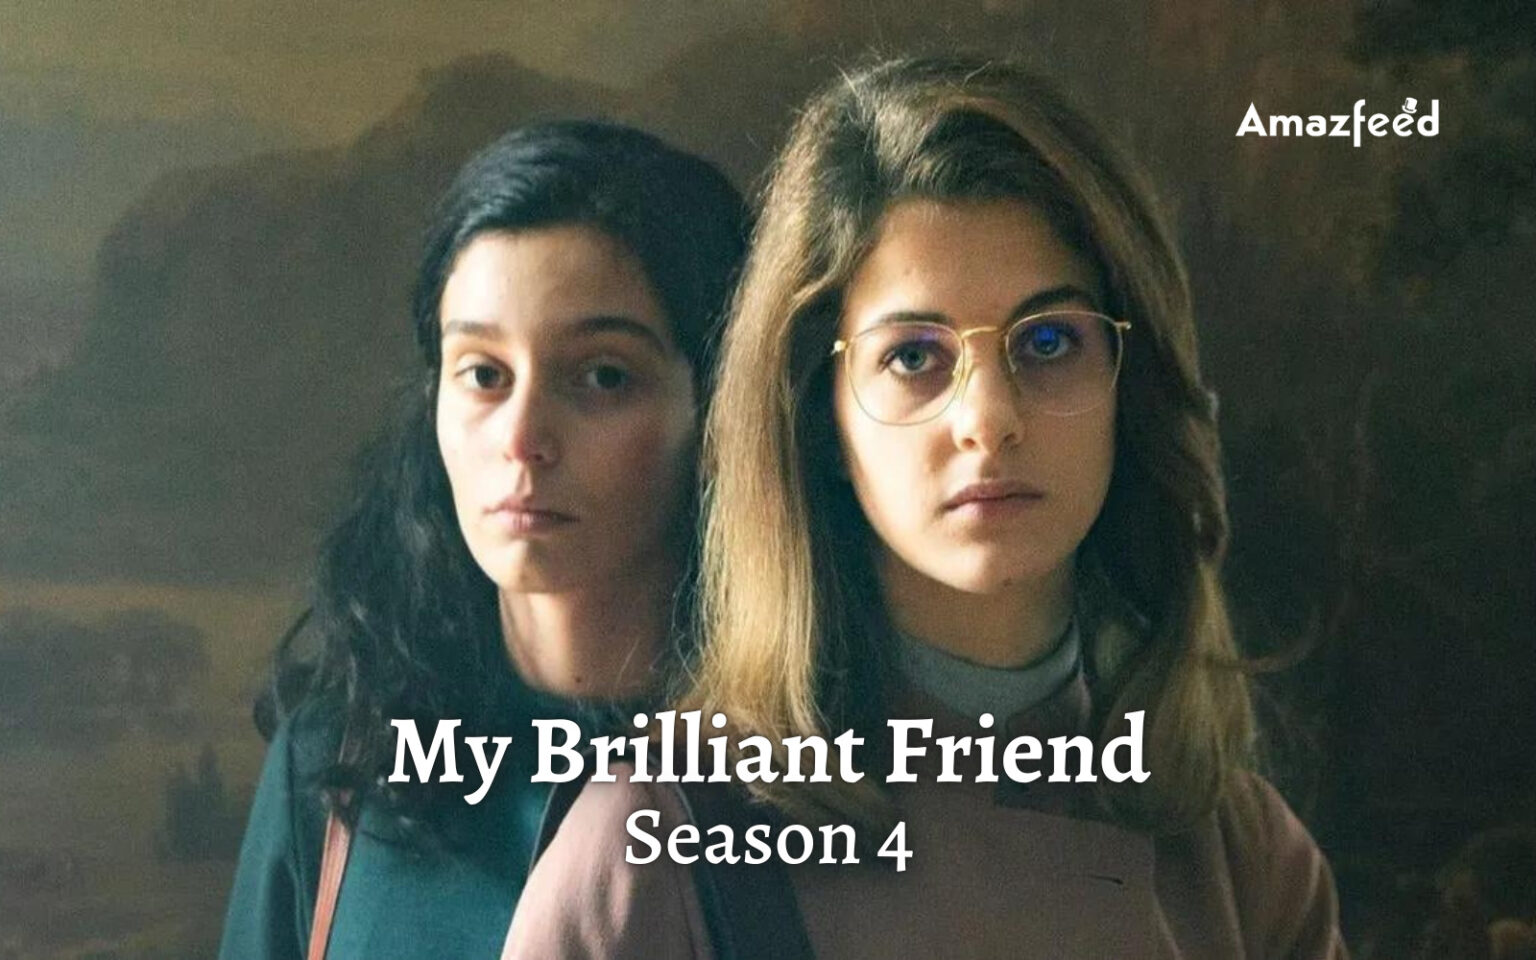 My Brilliant Friend Season 4 ⇒ Release Date, News, Cast, Spoilers